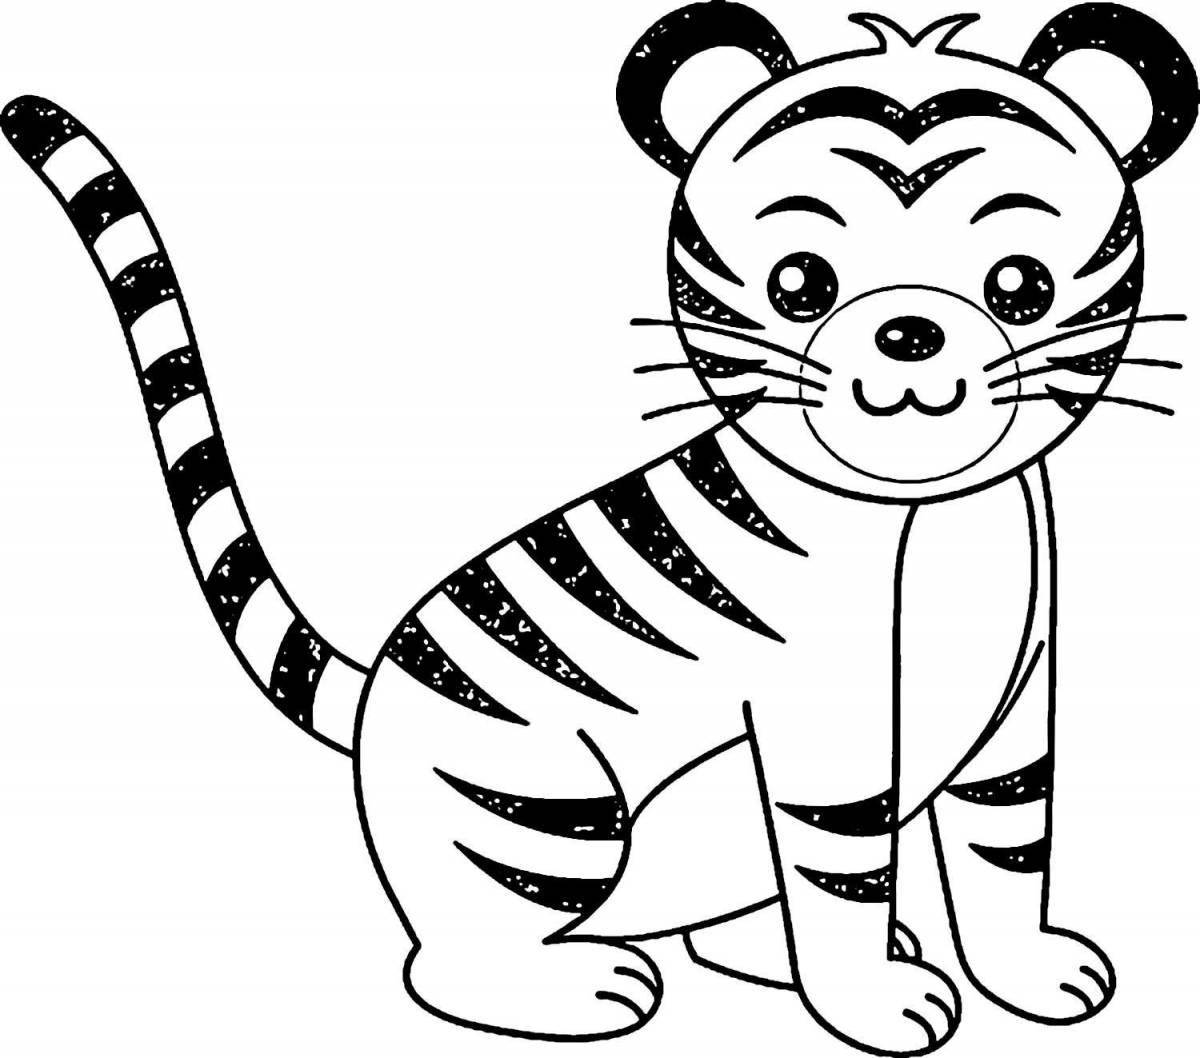 Wonderful tiger drawing for kids